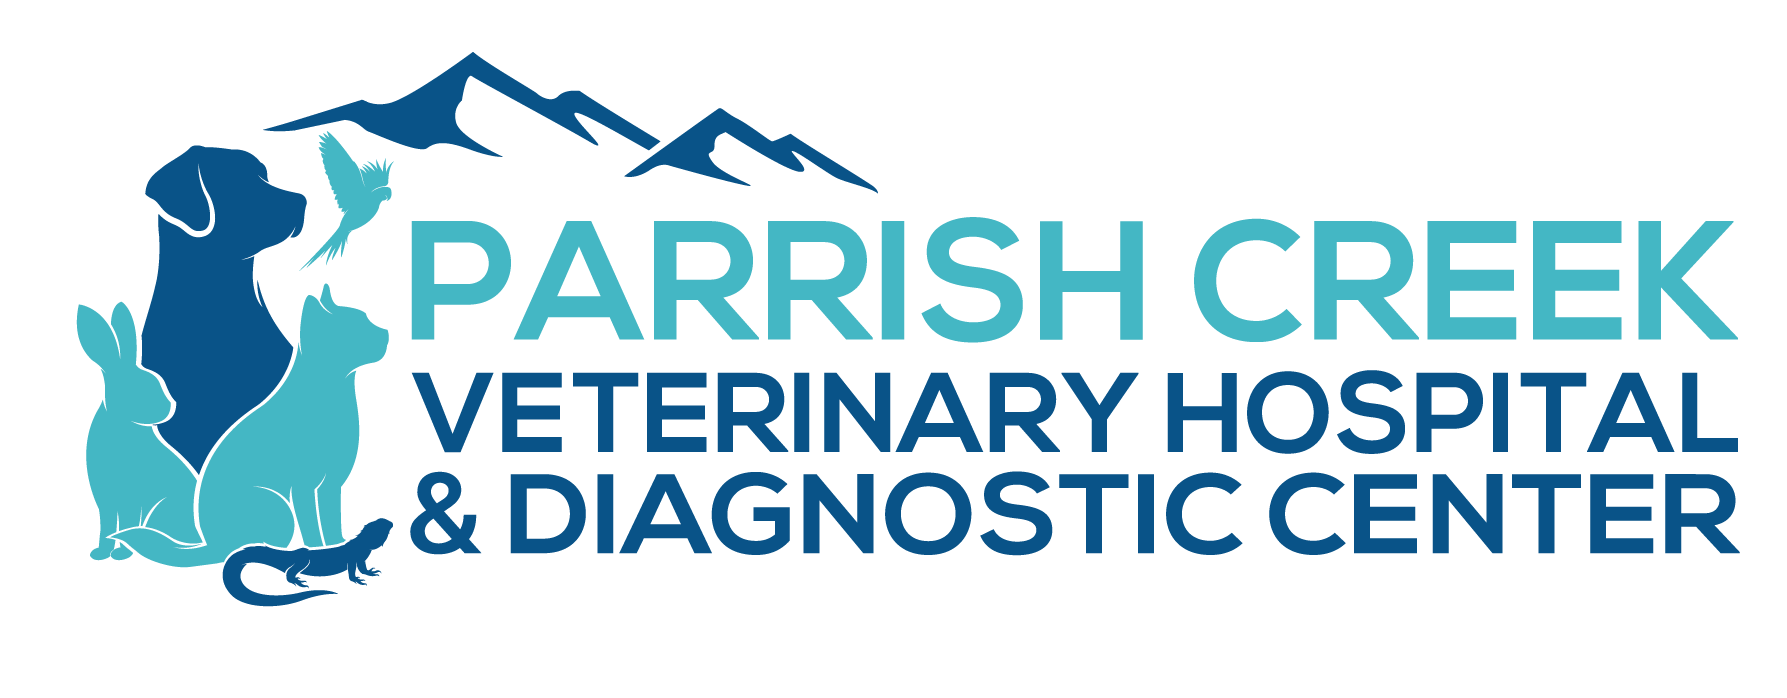 Parrish Creek Veterinary Hospital & Diagnostics Center